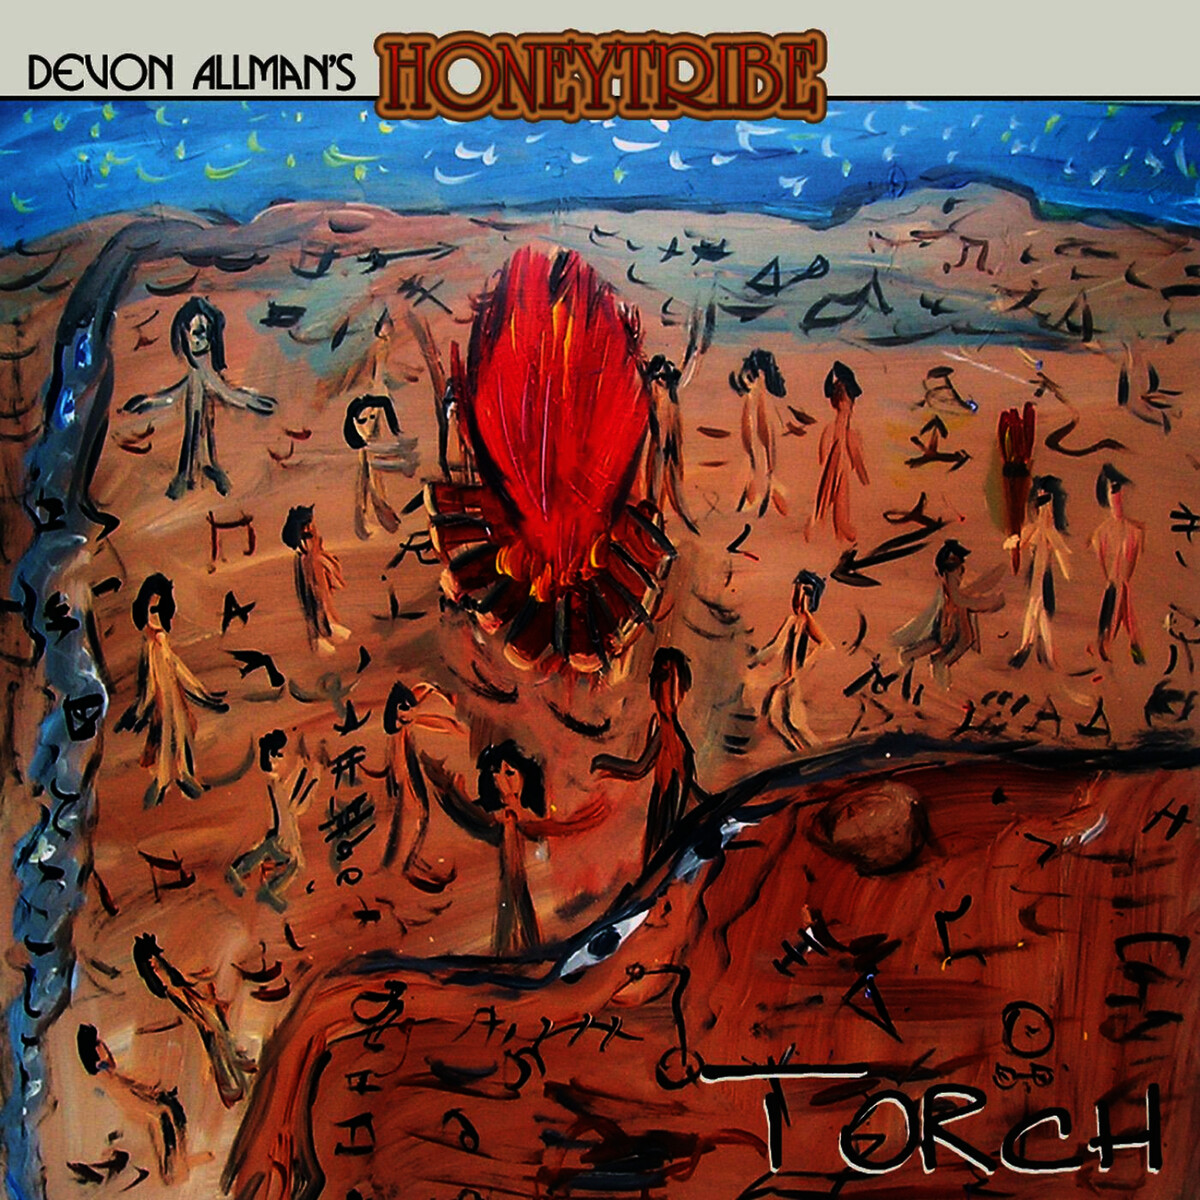 Devon Allman's Honeytribe - 2006 - Torch (Blues) (flac)